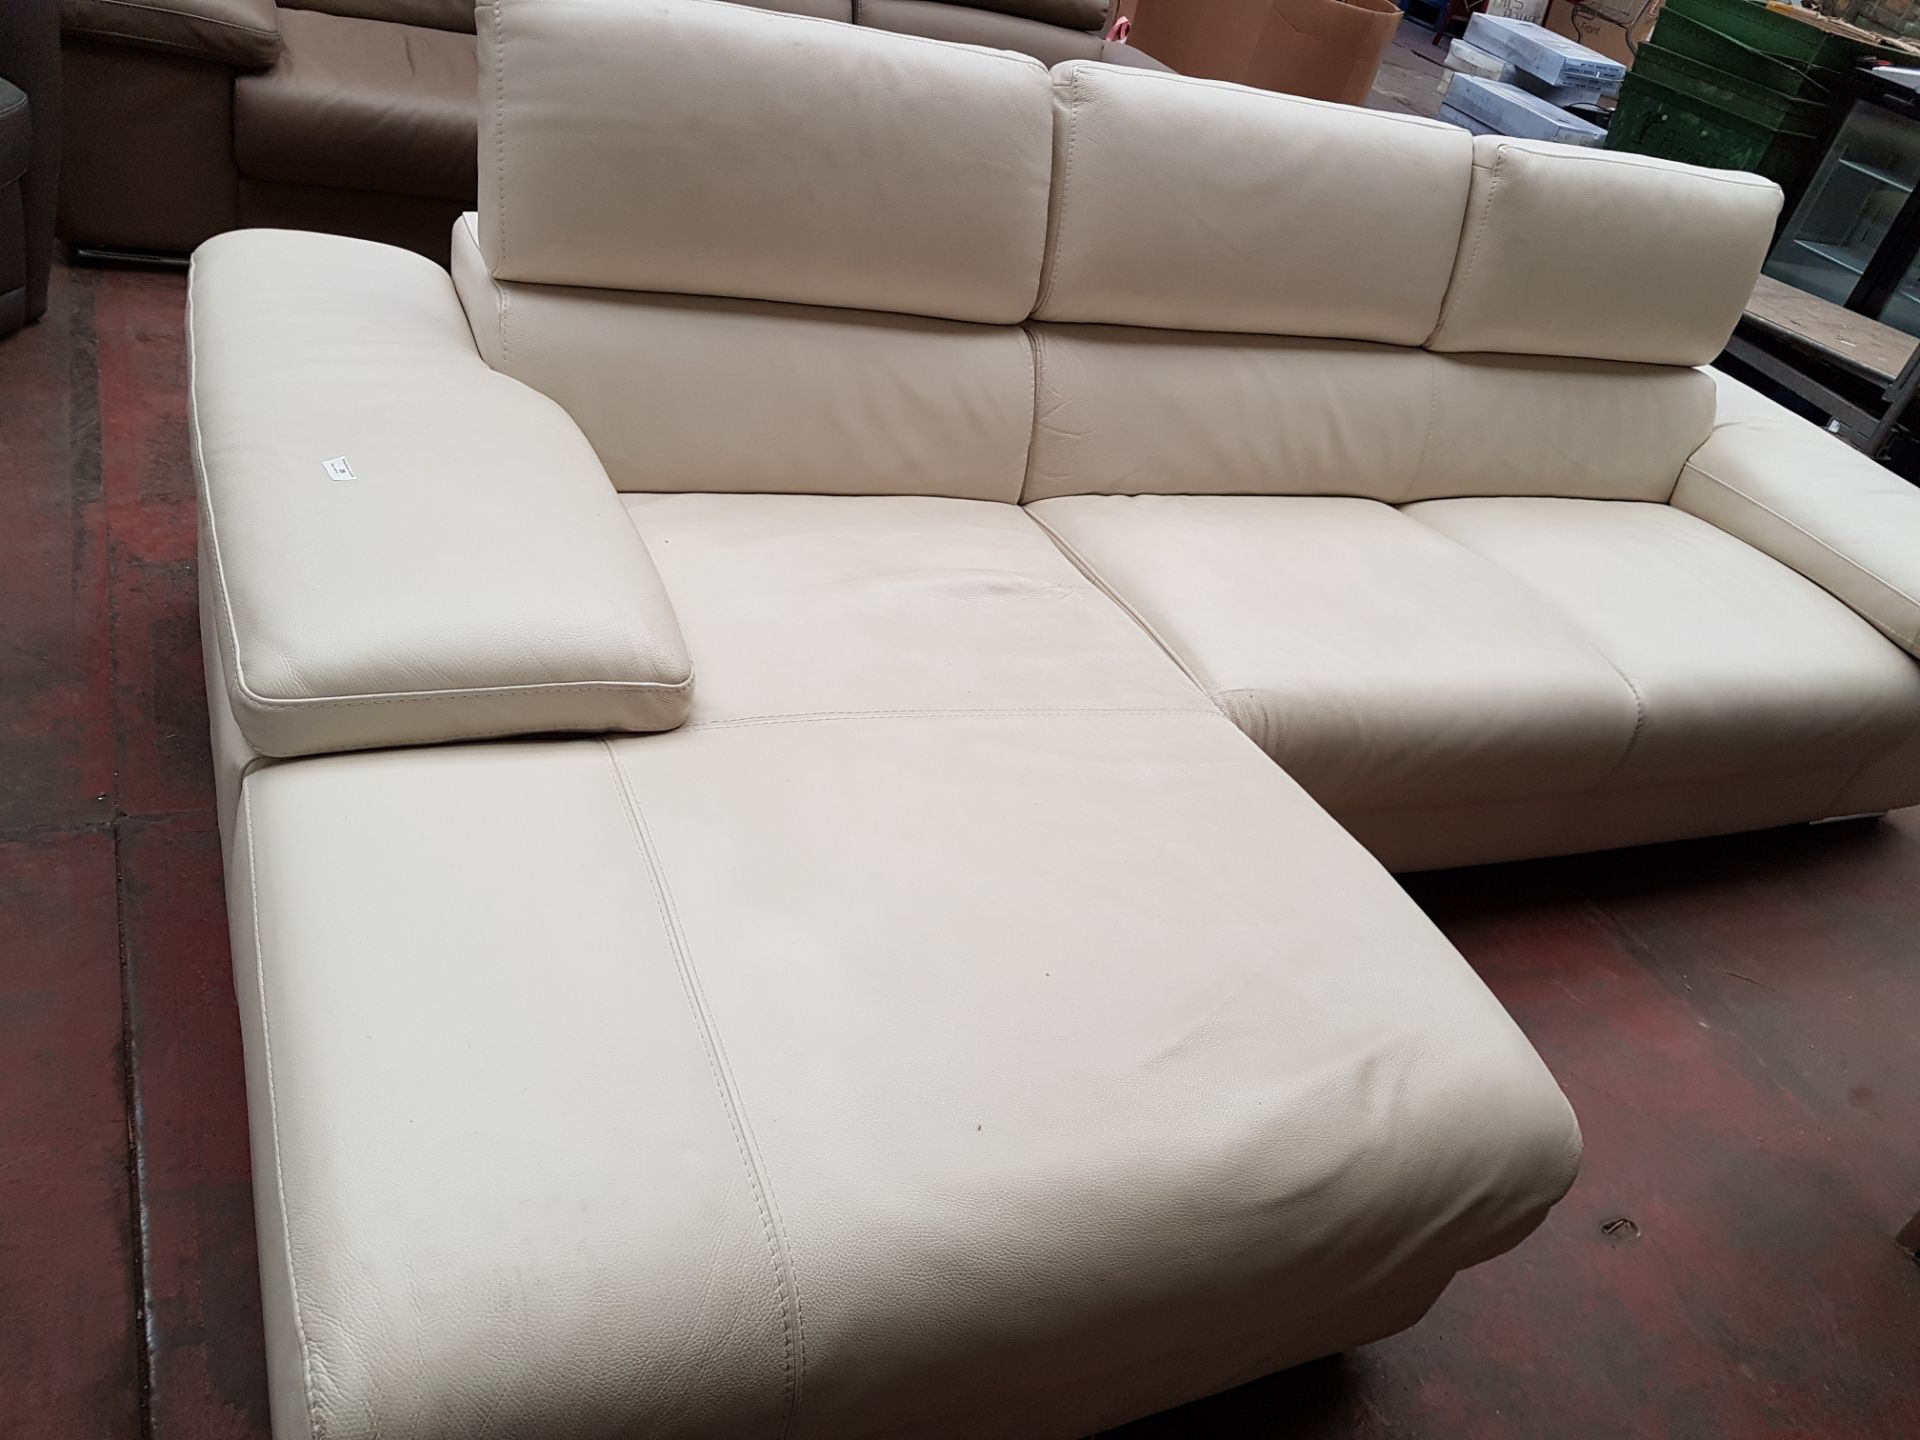 Nicoletti Lipari Italian Leather Sofa Chaise. RRP £2299.99 at https://www.costco.co.uk/Furniture-